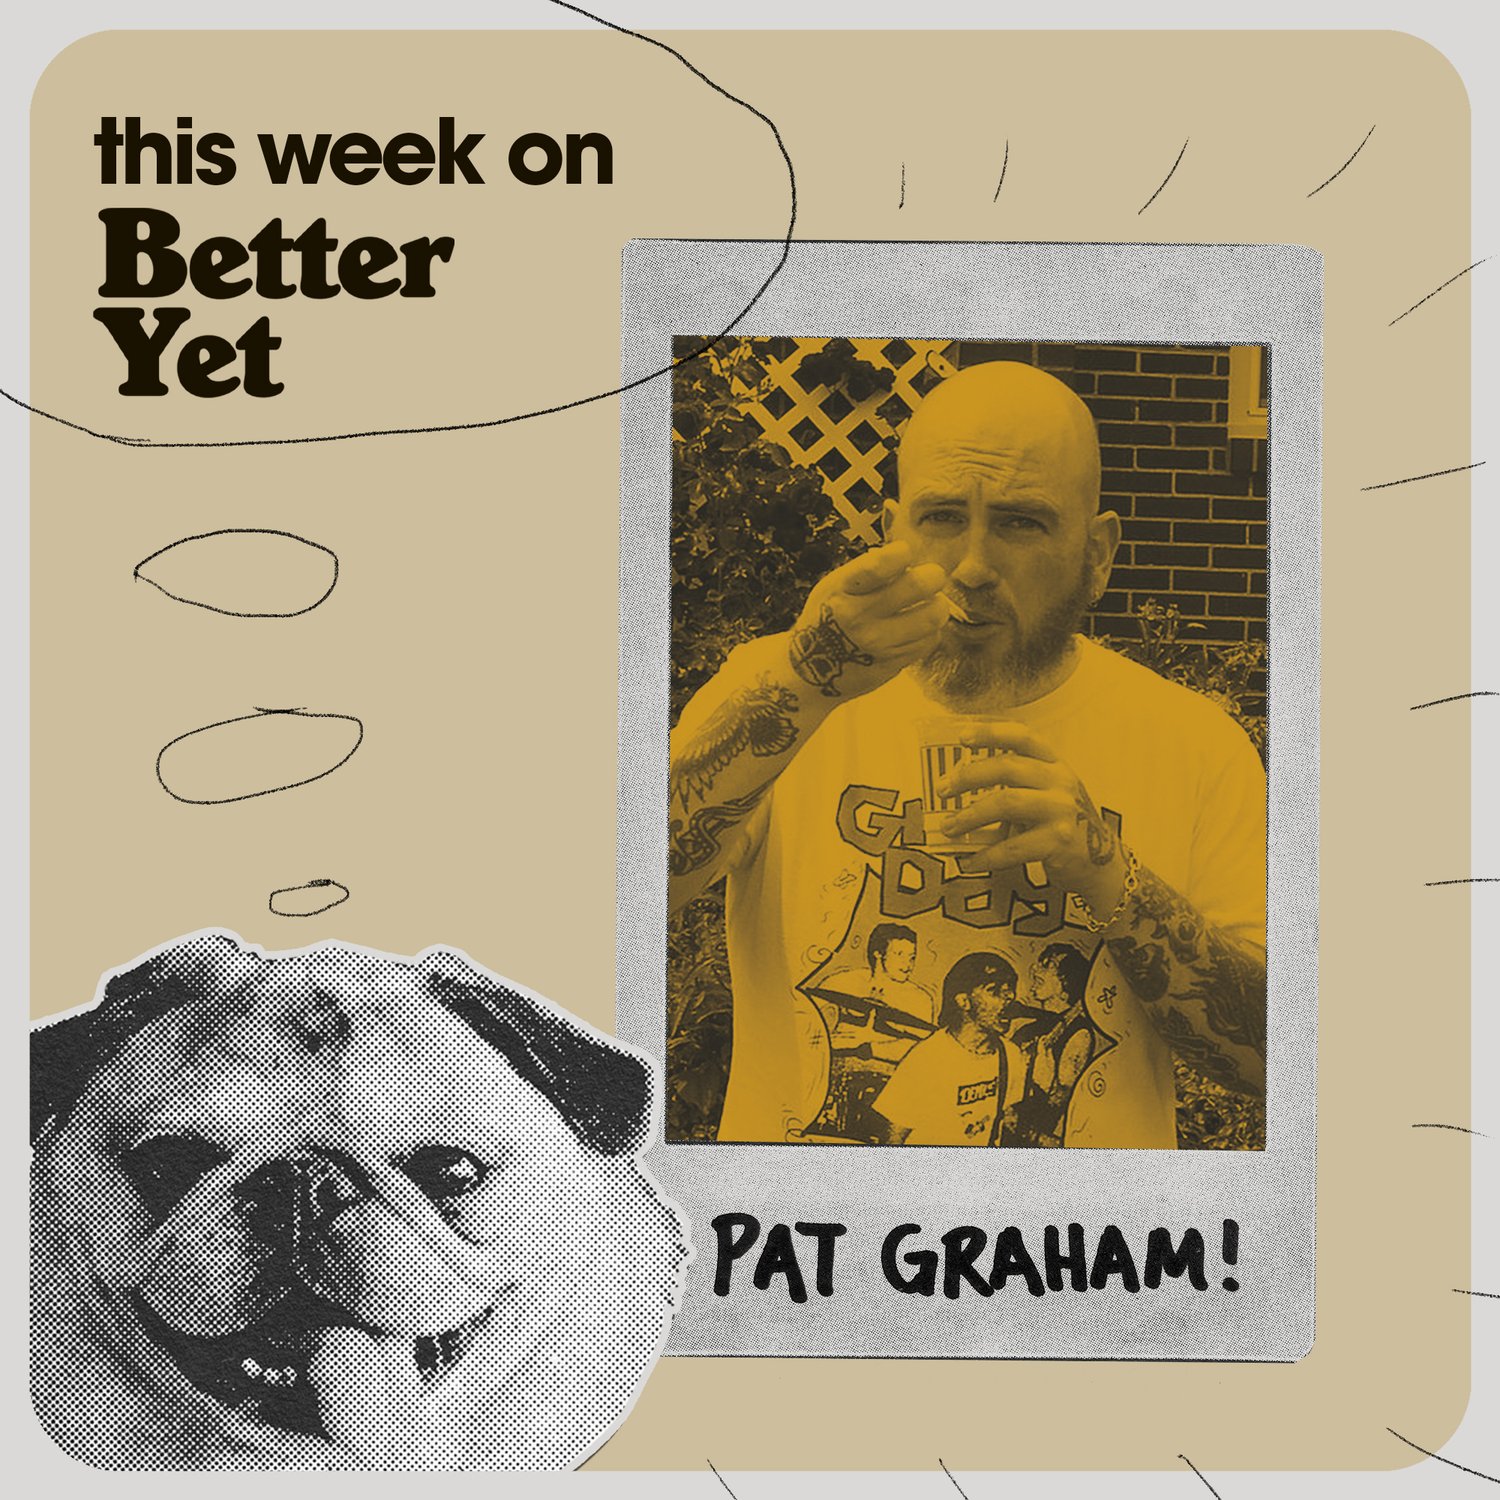 TALKING KIND: PAT GRAHAM!